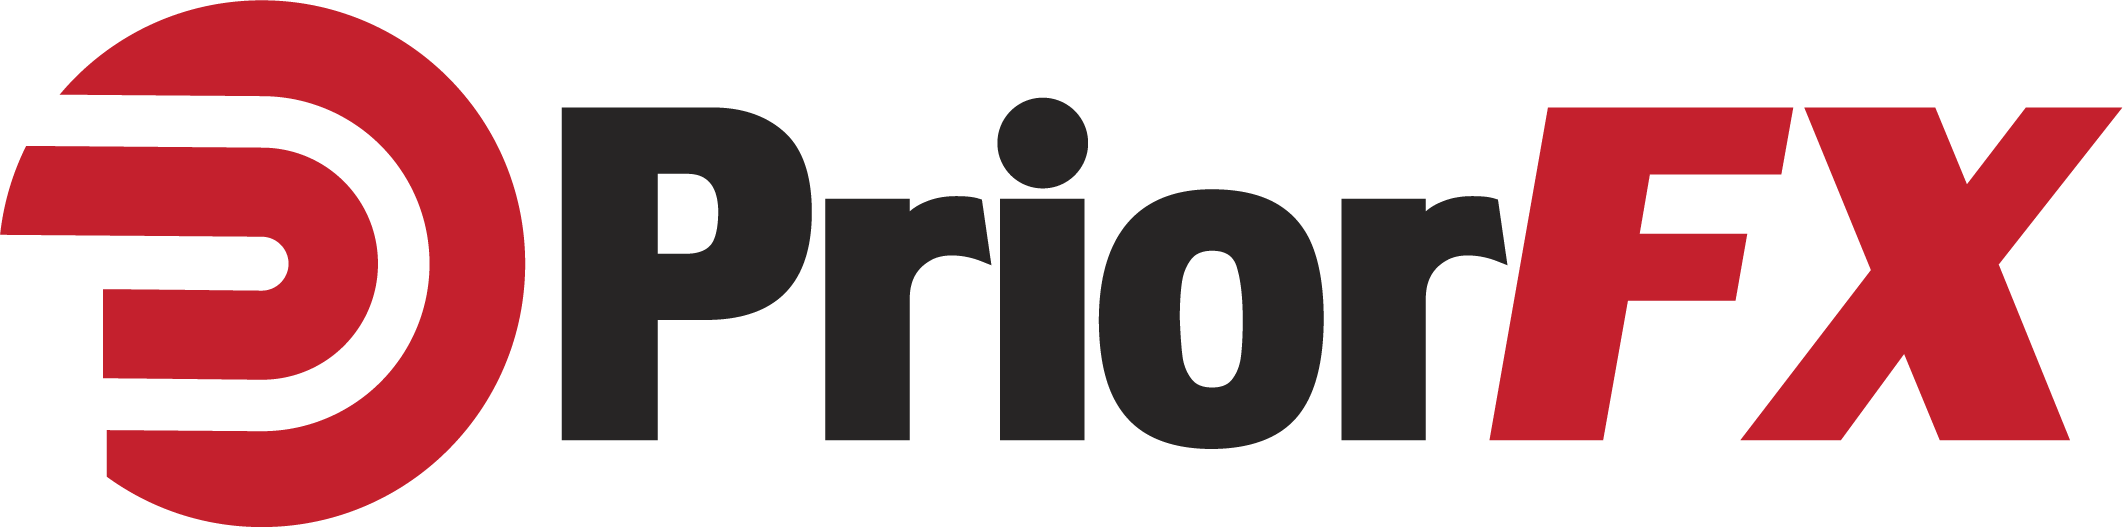 PrioFX logo